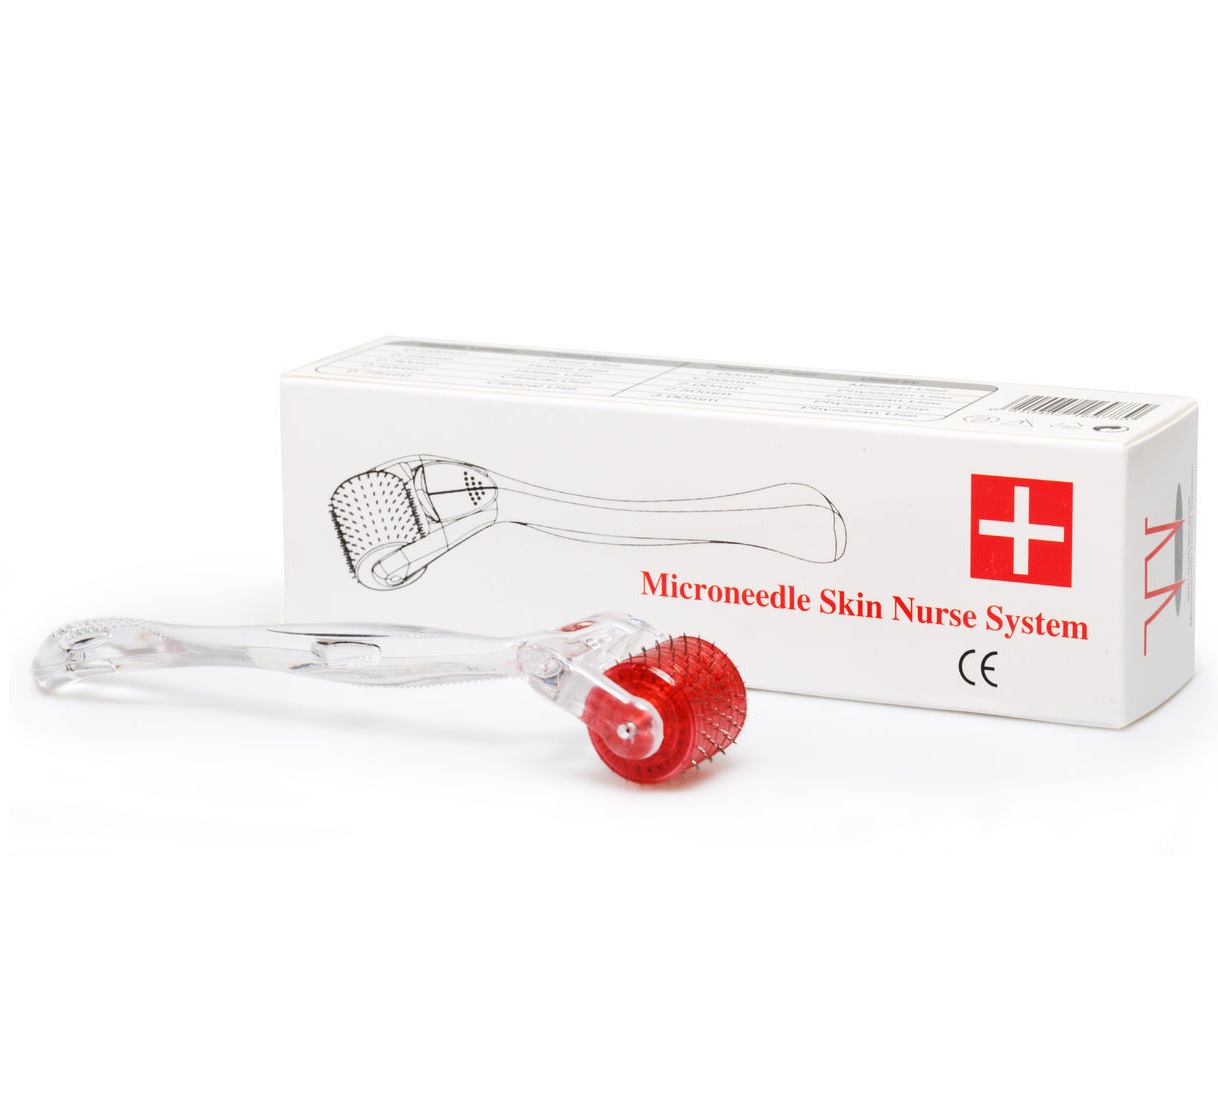 Мезороллер 1,0 мм 540 игл Tete Cosmeceutical Microneedling Nurse System мезороллер 0 3 мм 540 игл tete microneedling nurse system